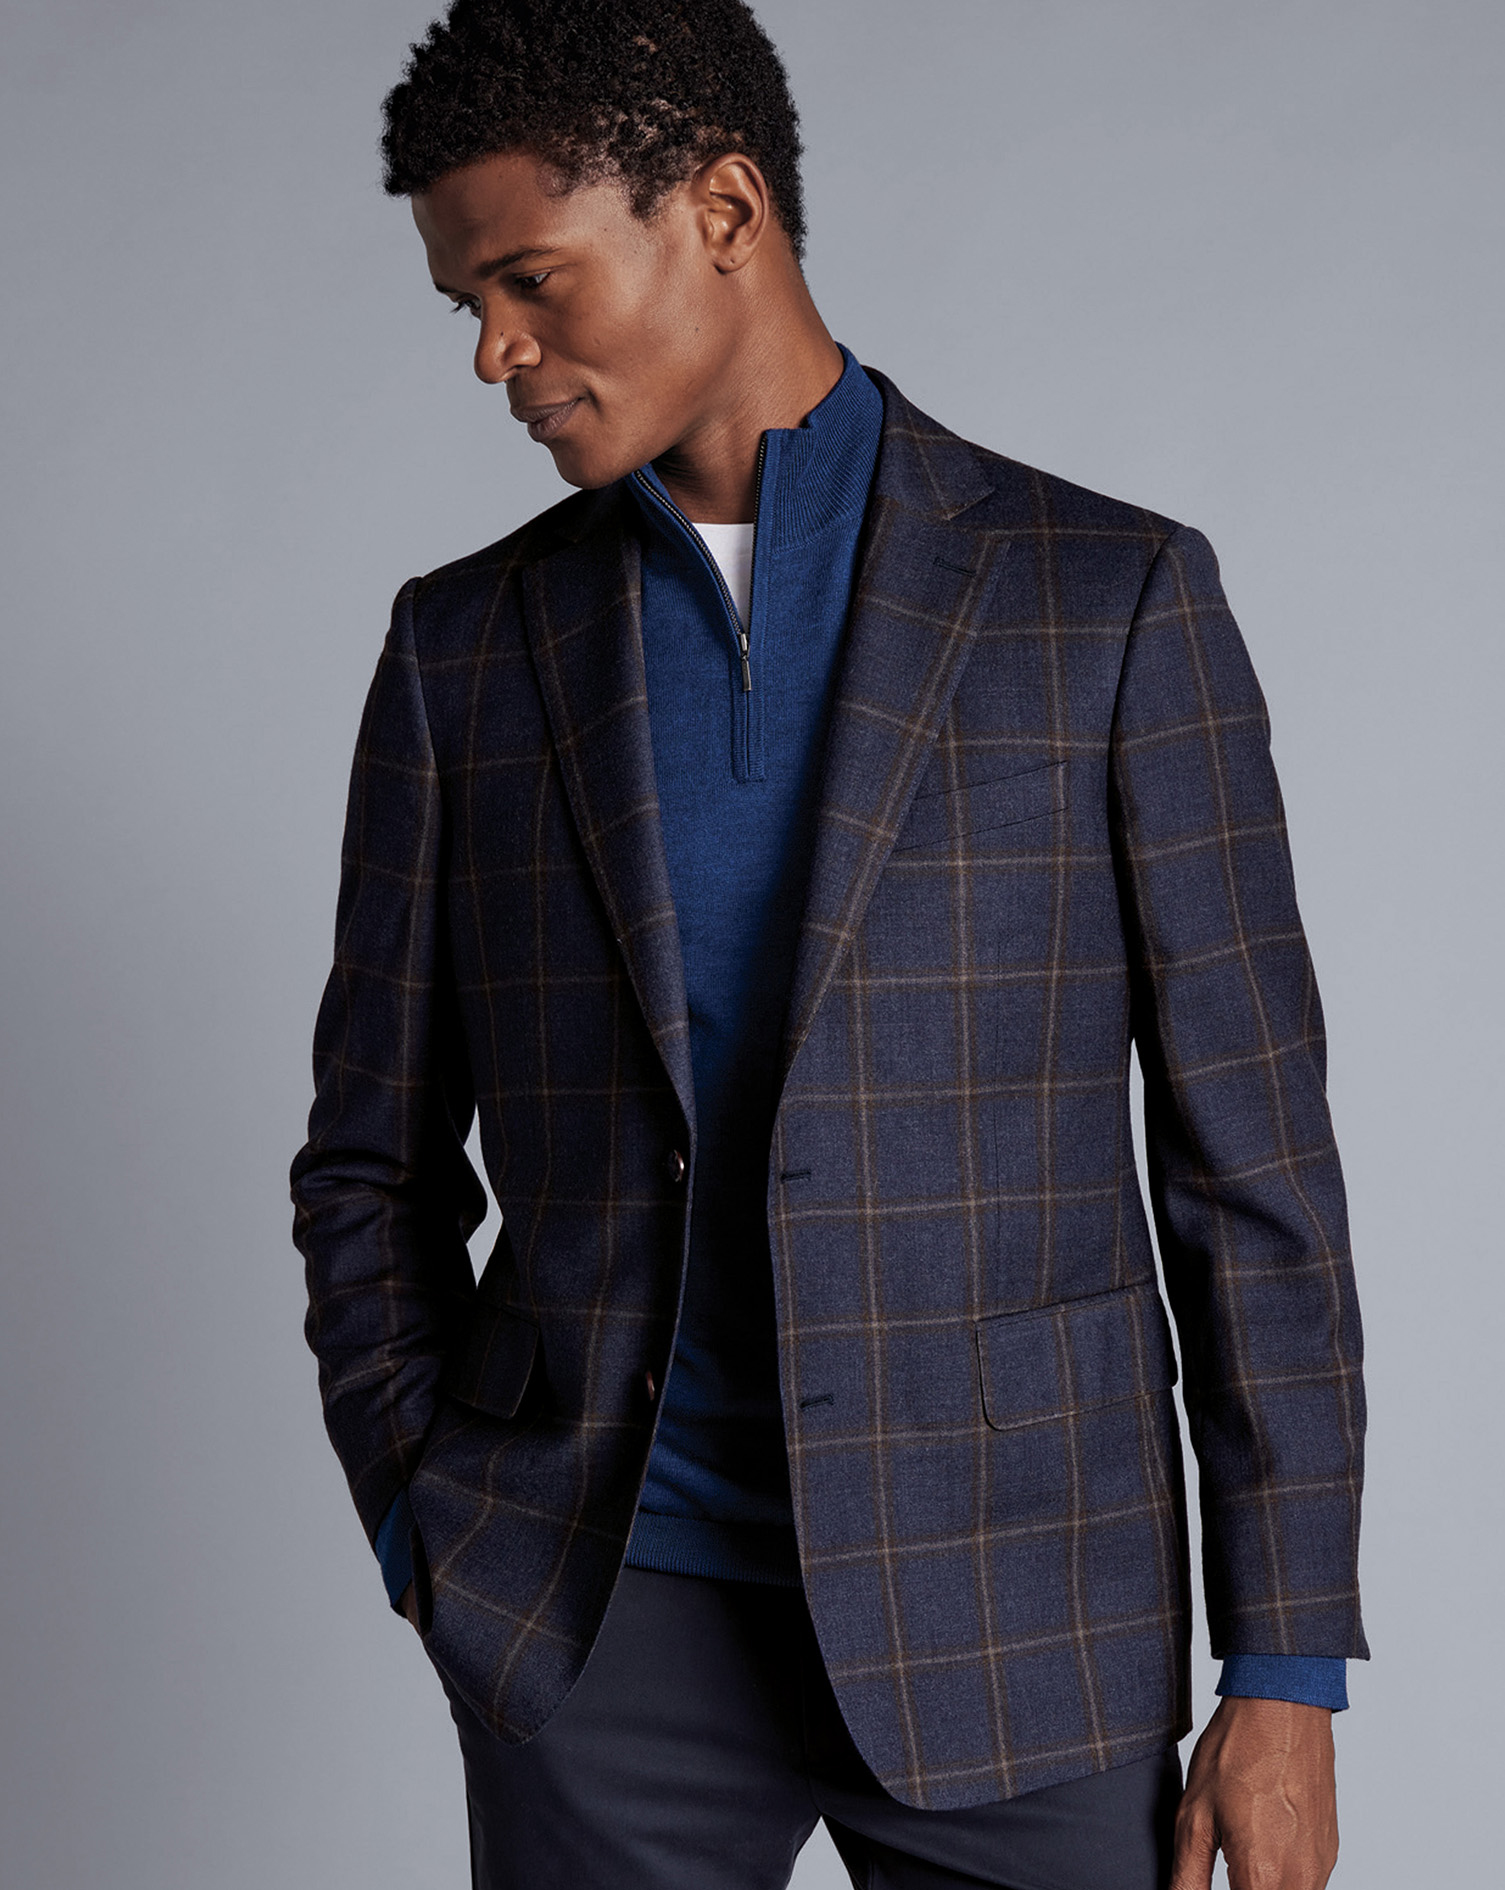 Men's Charles Tyrwhitt Checkered Windowpane Texture na Jacket - Steel Blue Size 36R Wool
